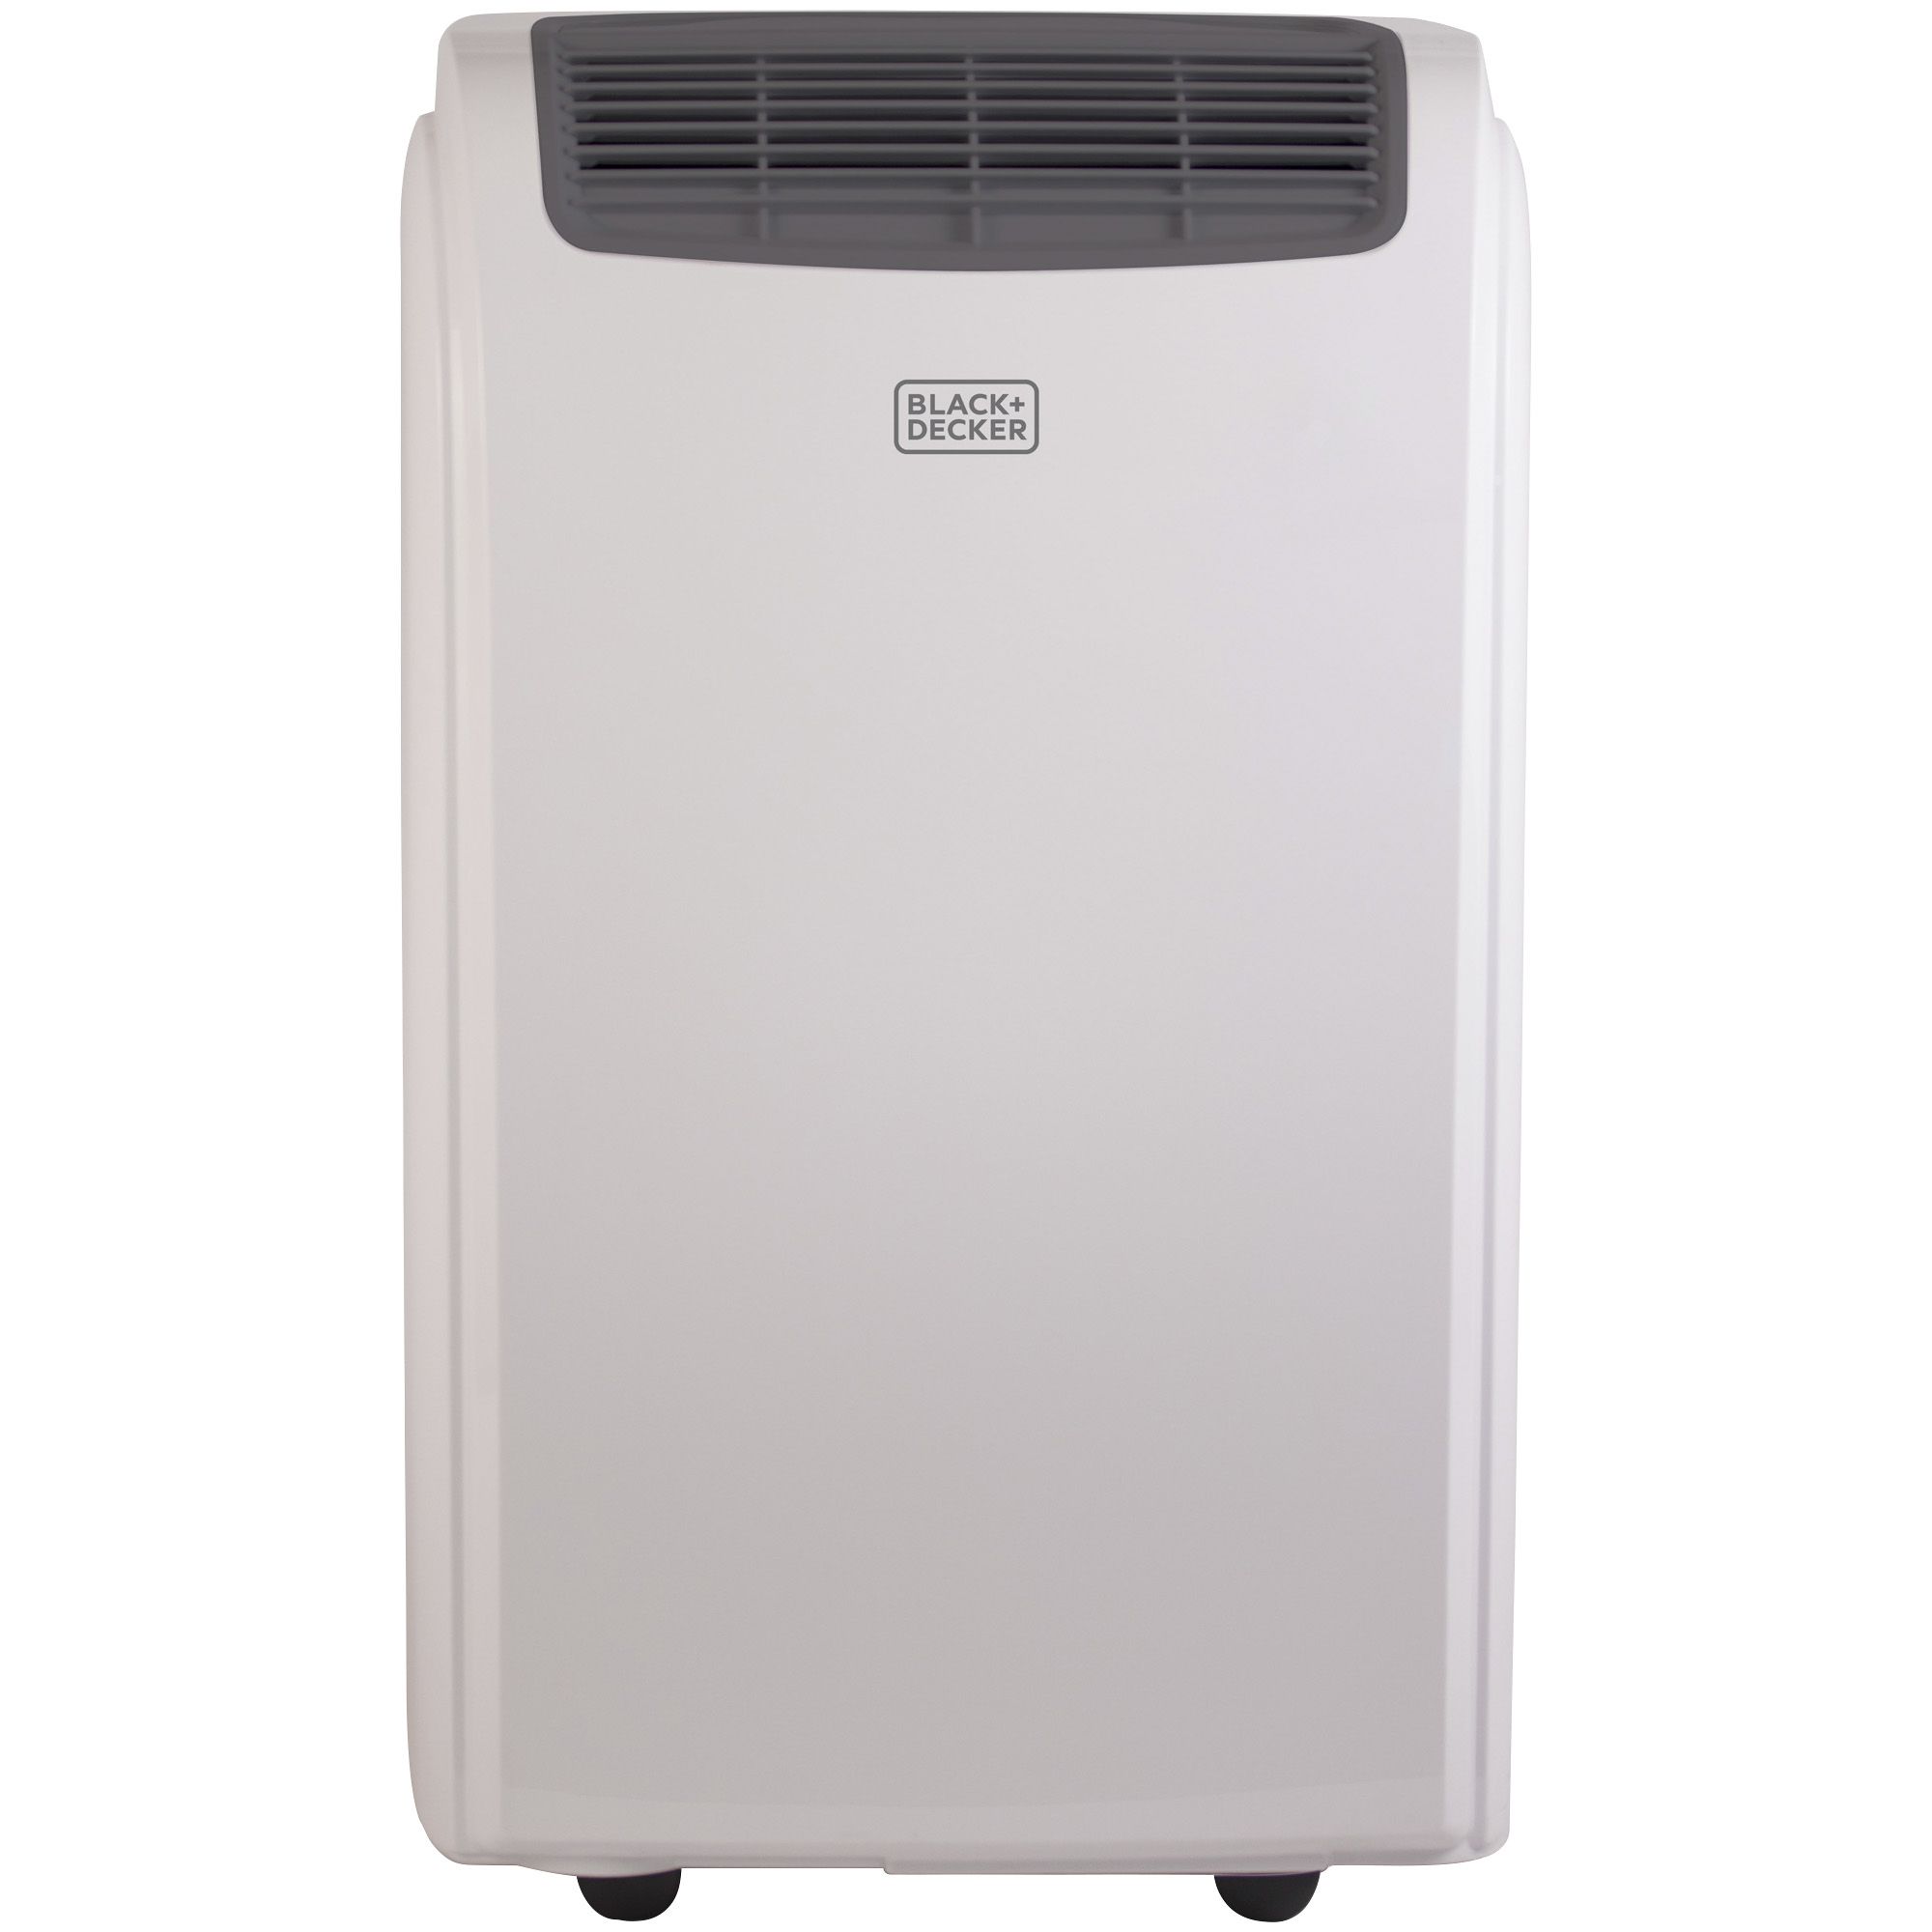 BLACK+DECKER BPACT08WT 5,000 BTU Portable Air Conditioner for sale online